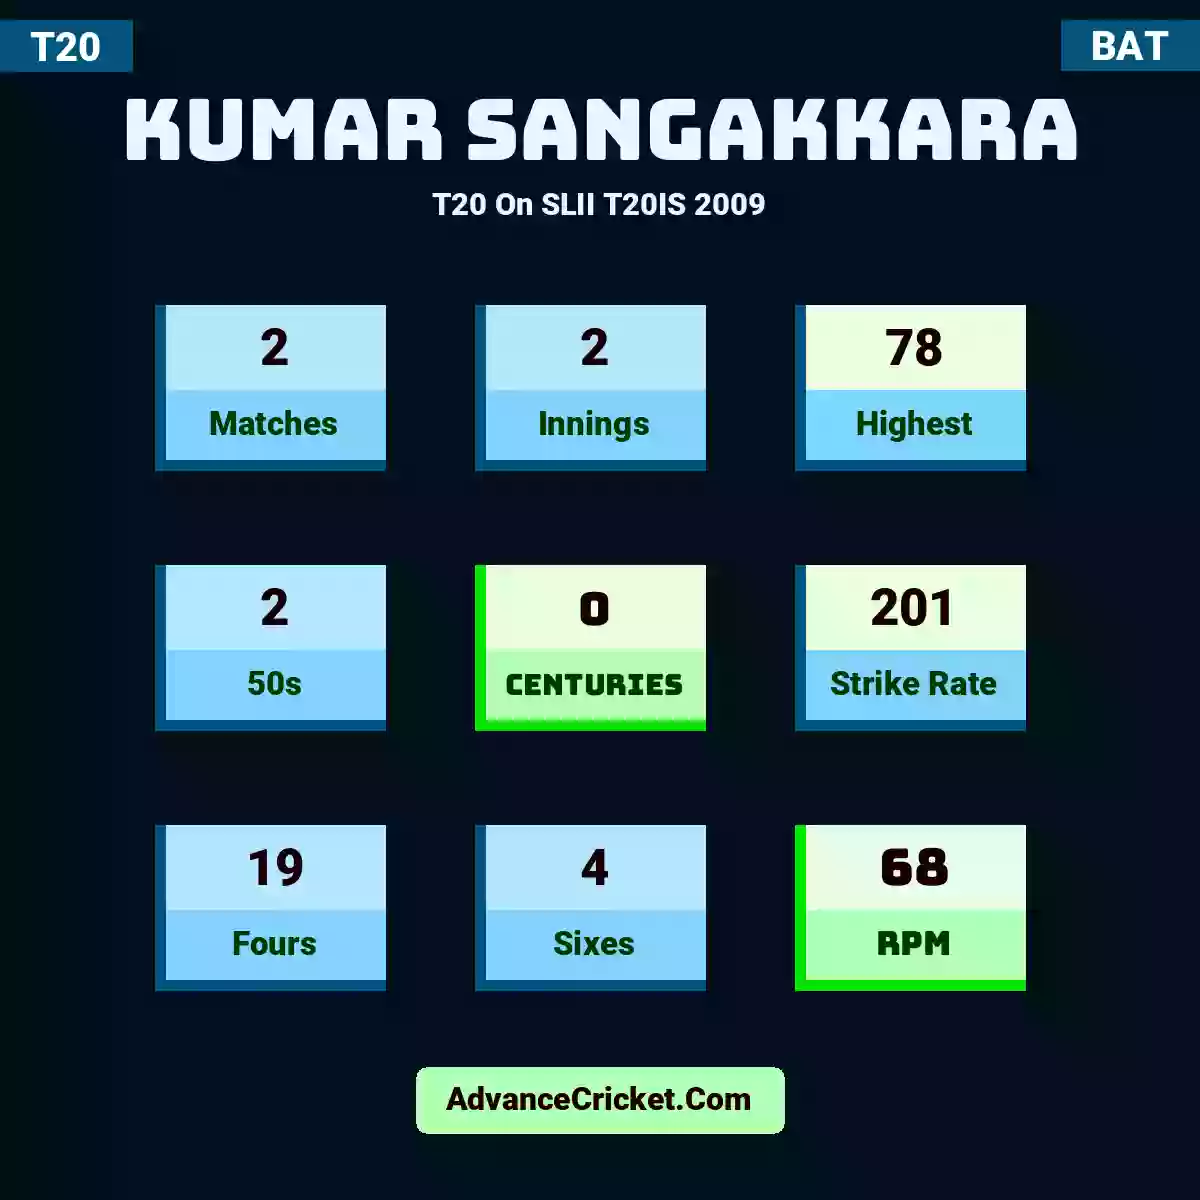 Kumar Sangakkara T20  On SLII T20IS 2009, Kumar Sangakkara played 2 matches, scored 78 runs as highest, 2 half-centuries, and 0 centuries, with a strike rate of 201. K.Sangakkara hit 19 fours and 4 sixes, with an RPM of 68.